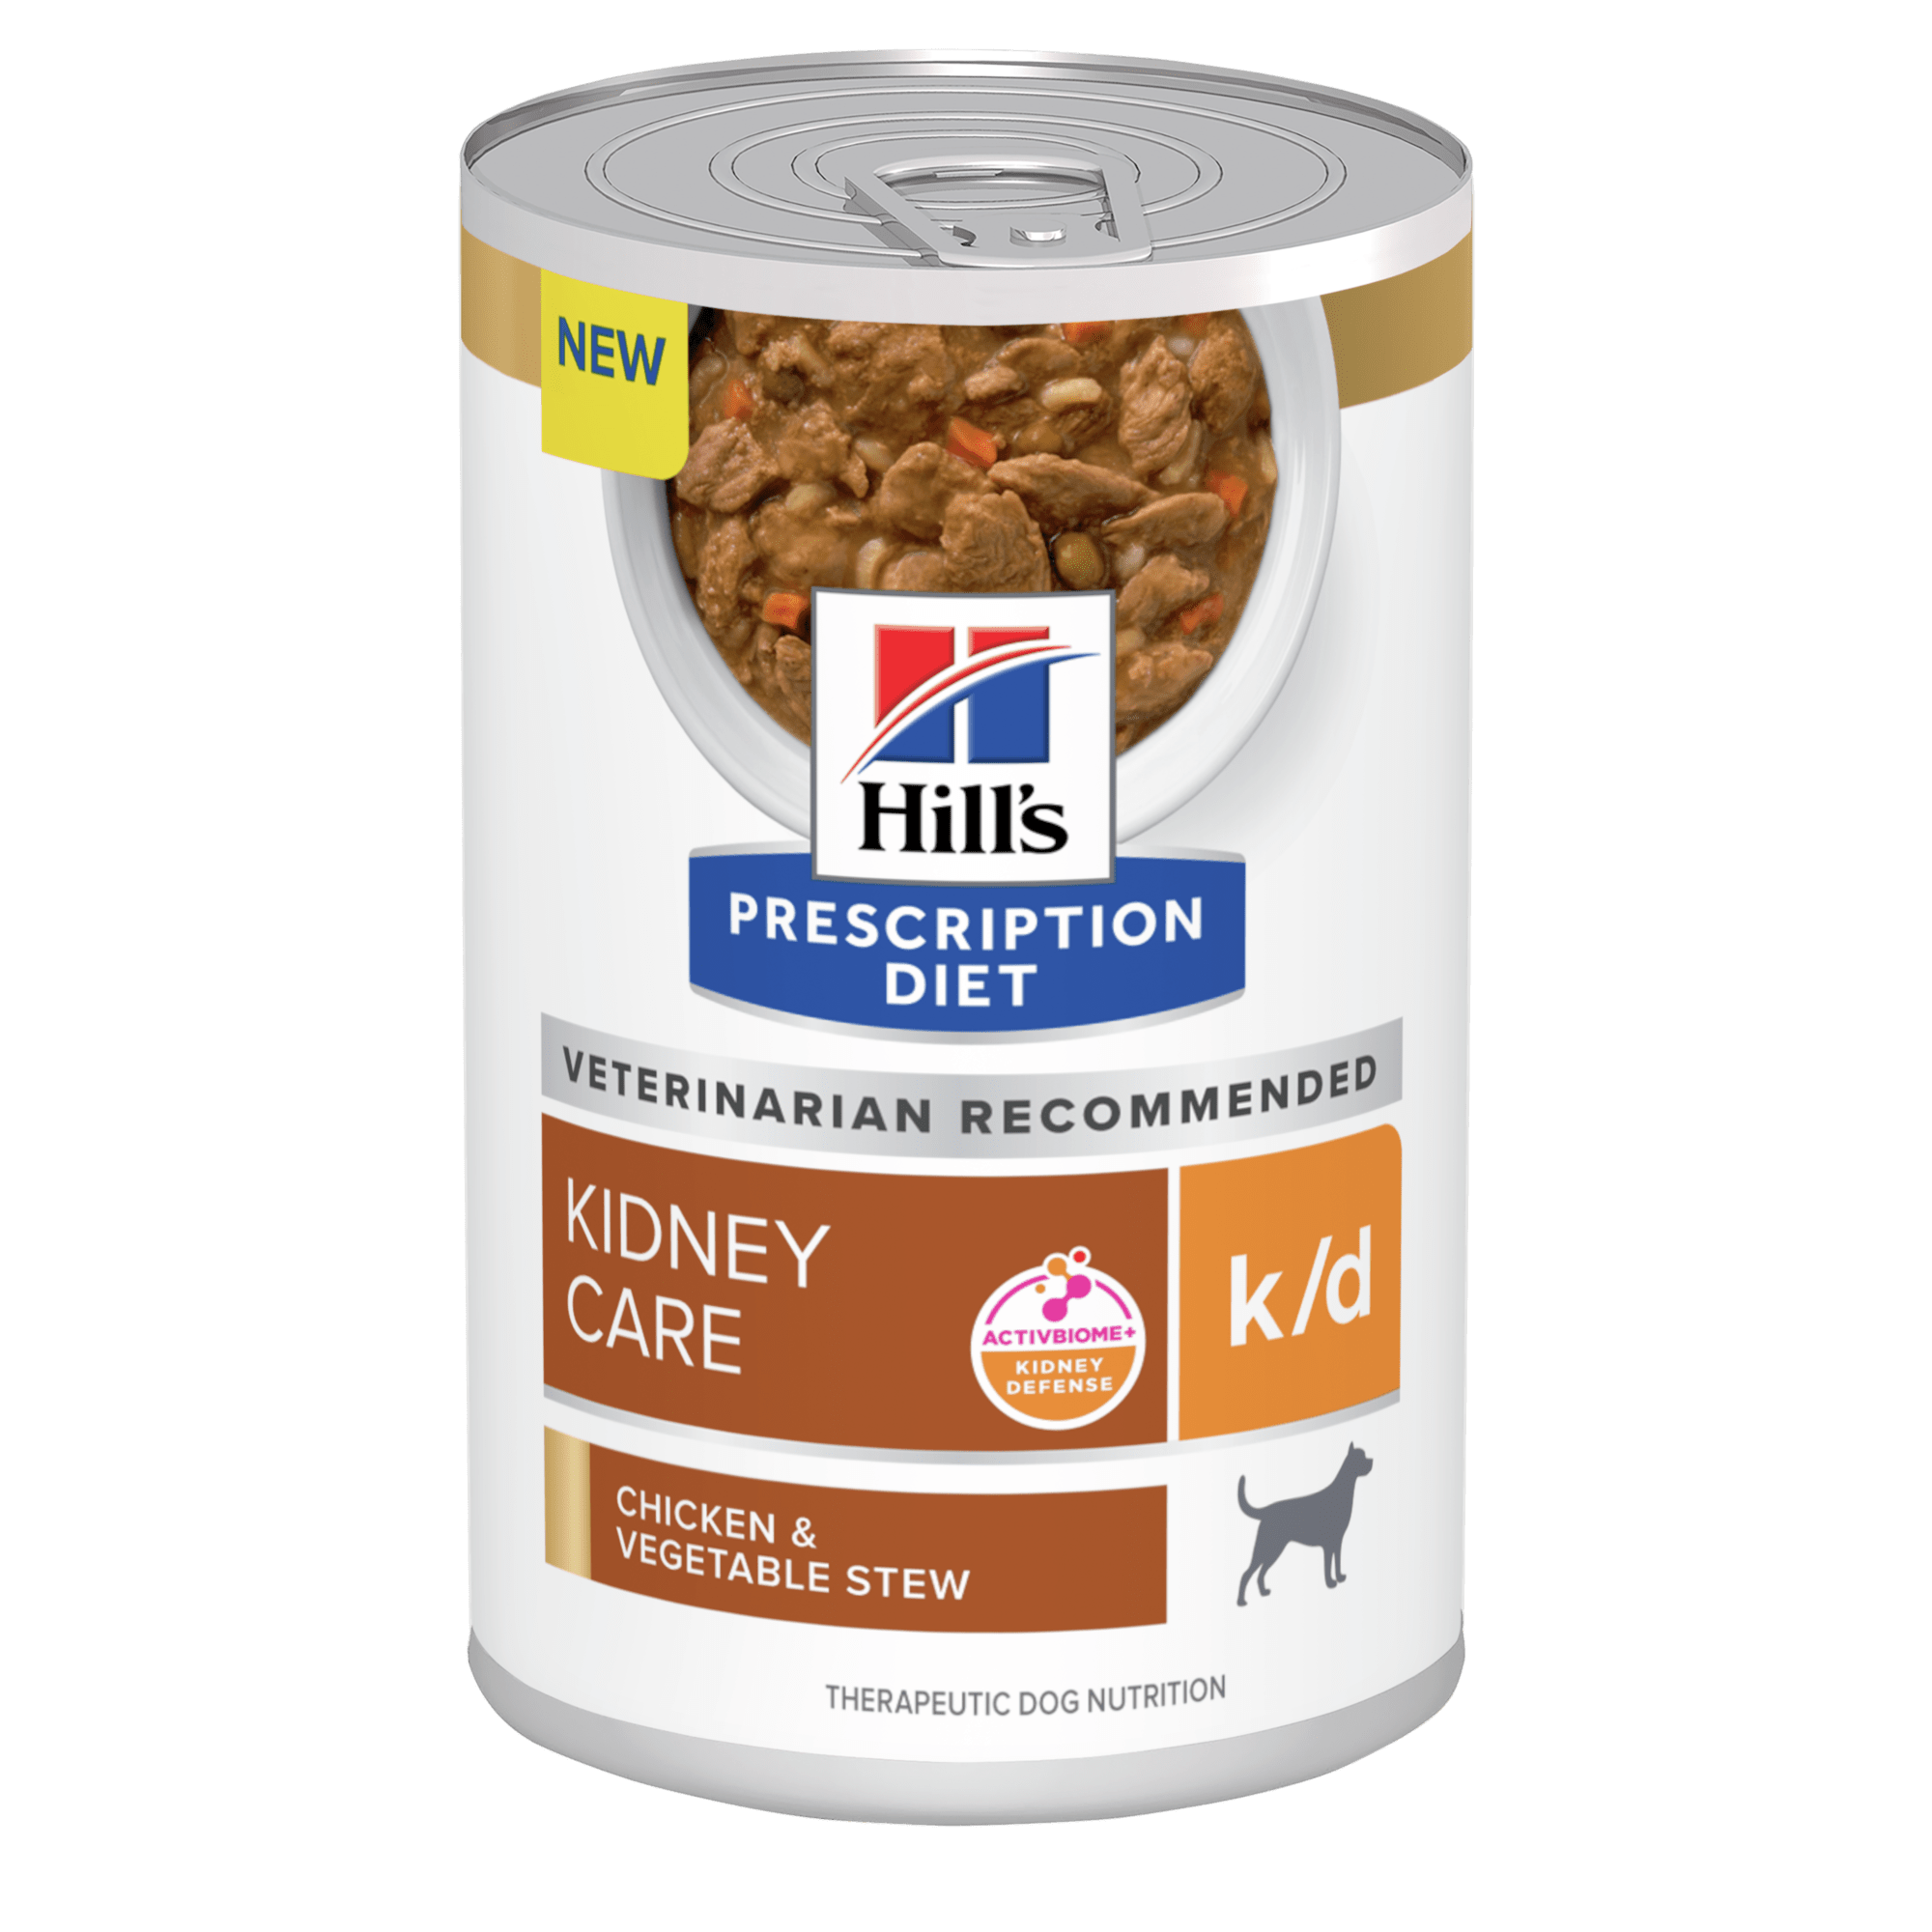 hills perscription dog food